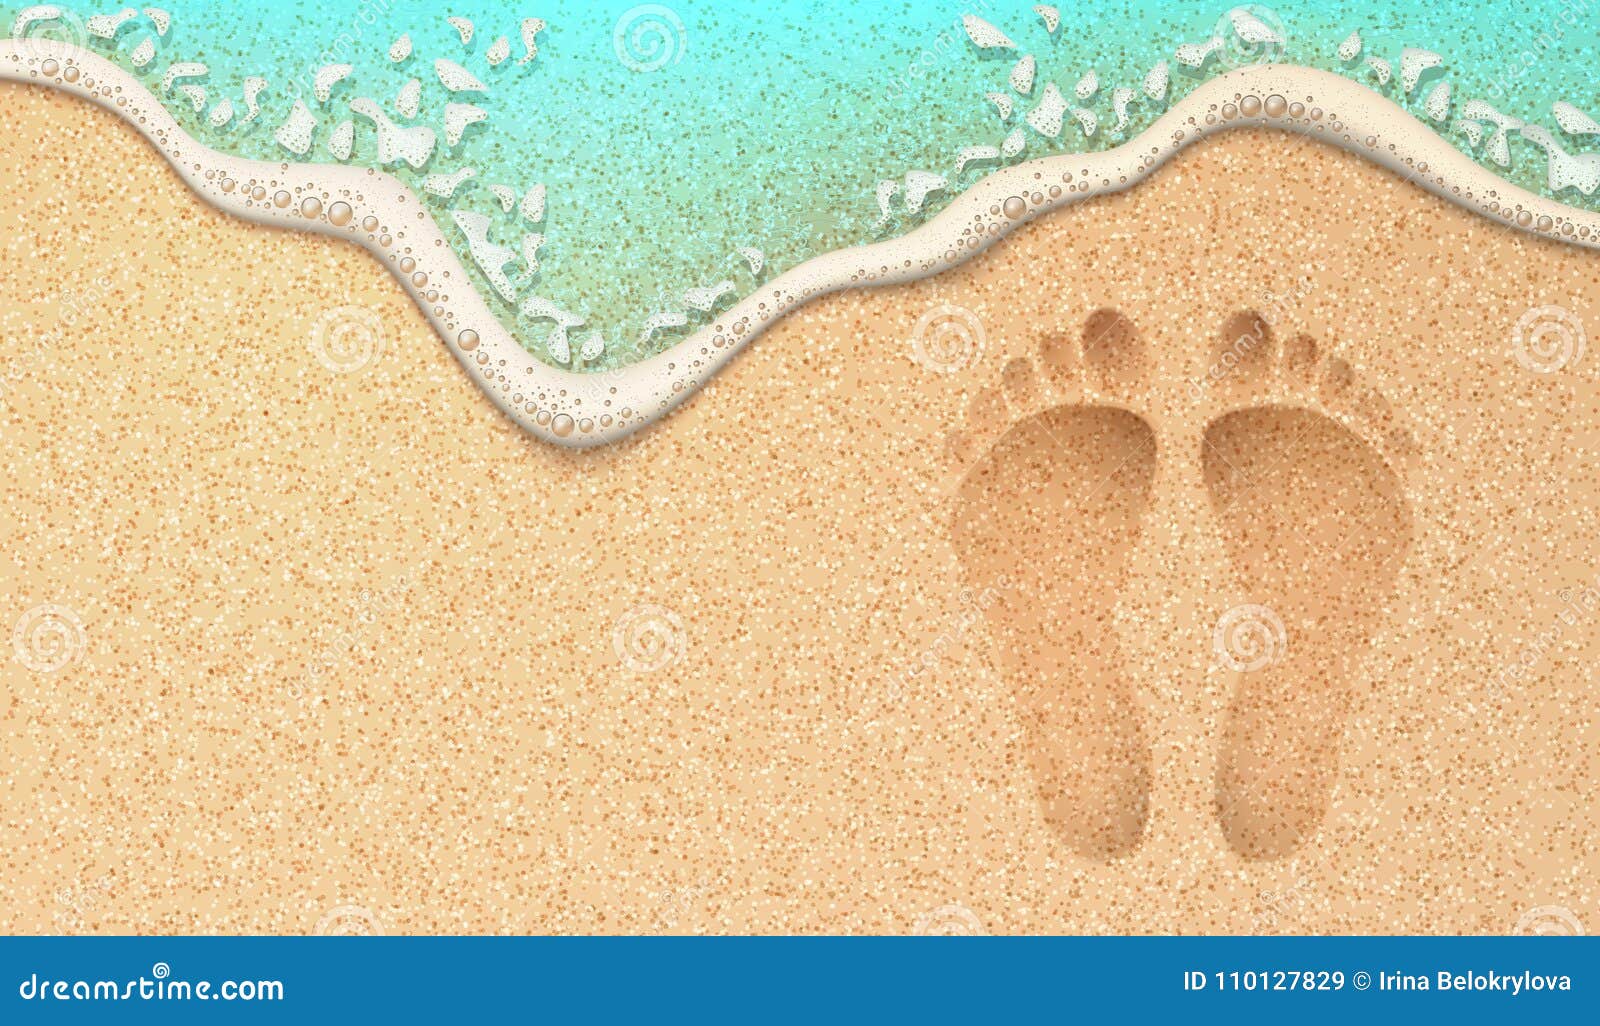  realistic human footprint on sea beach sand